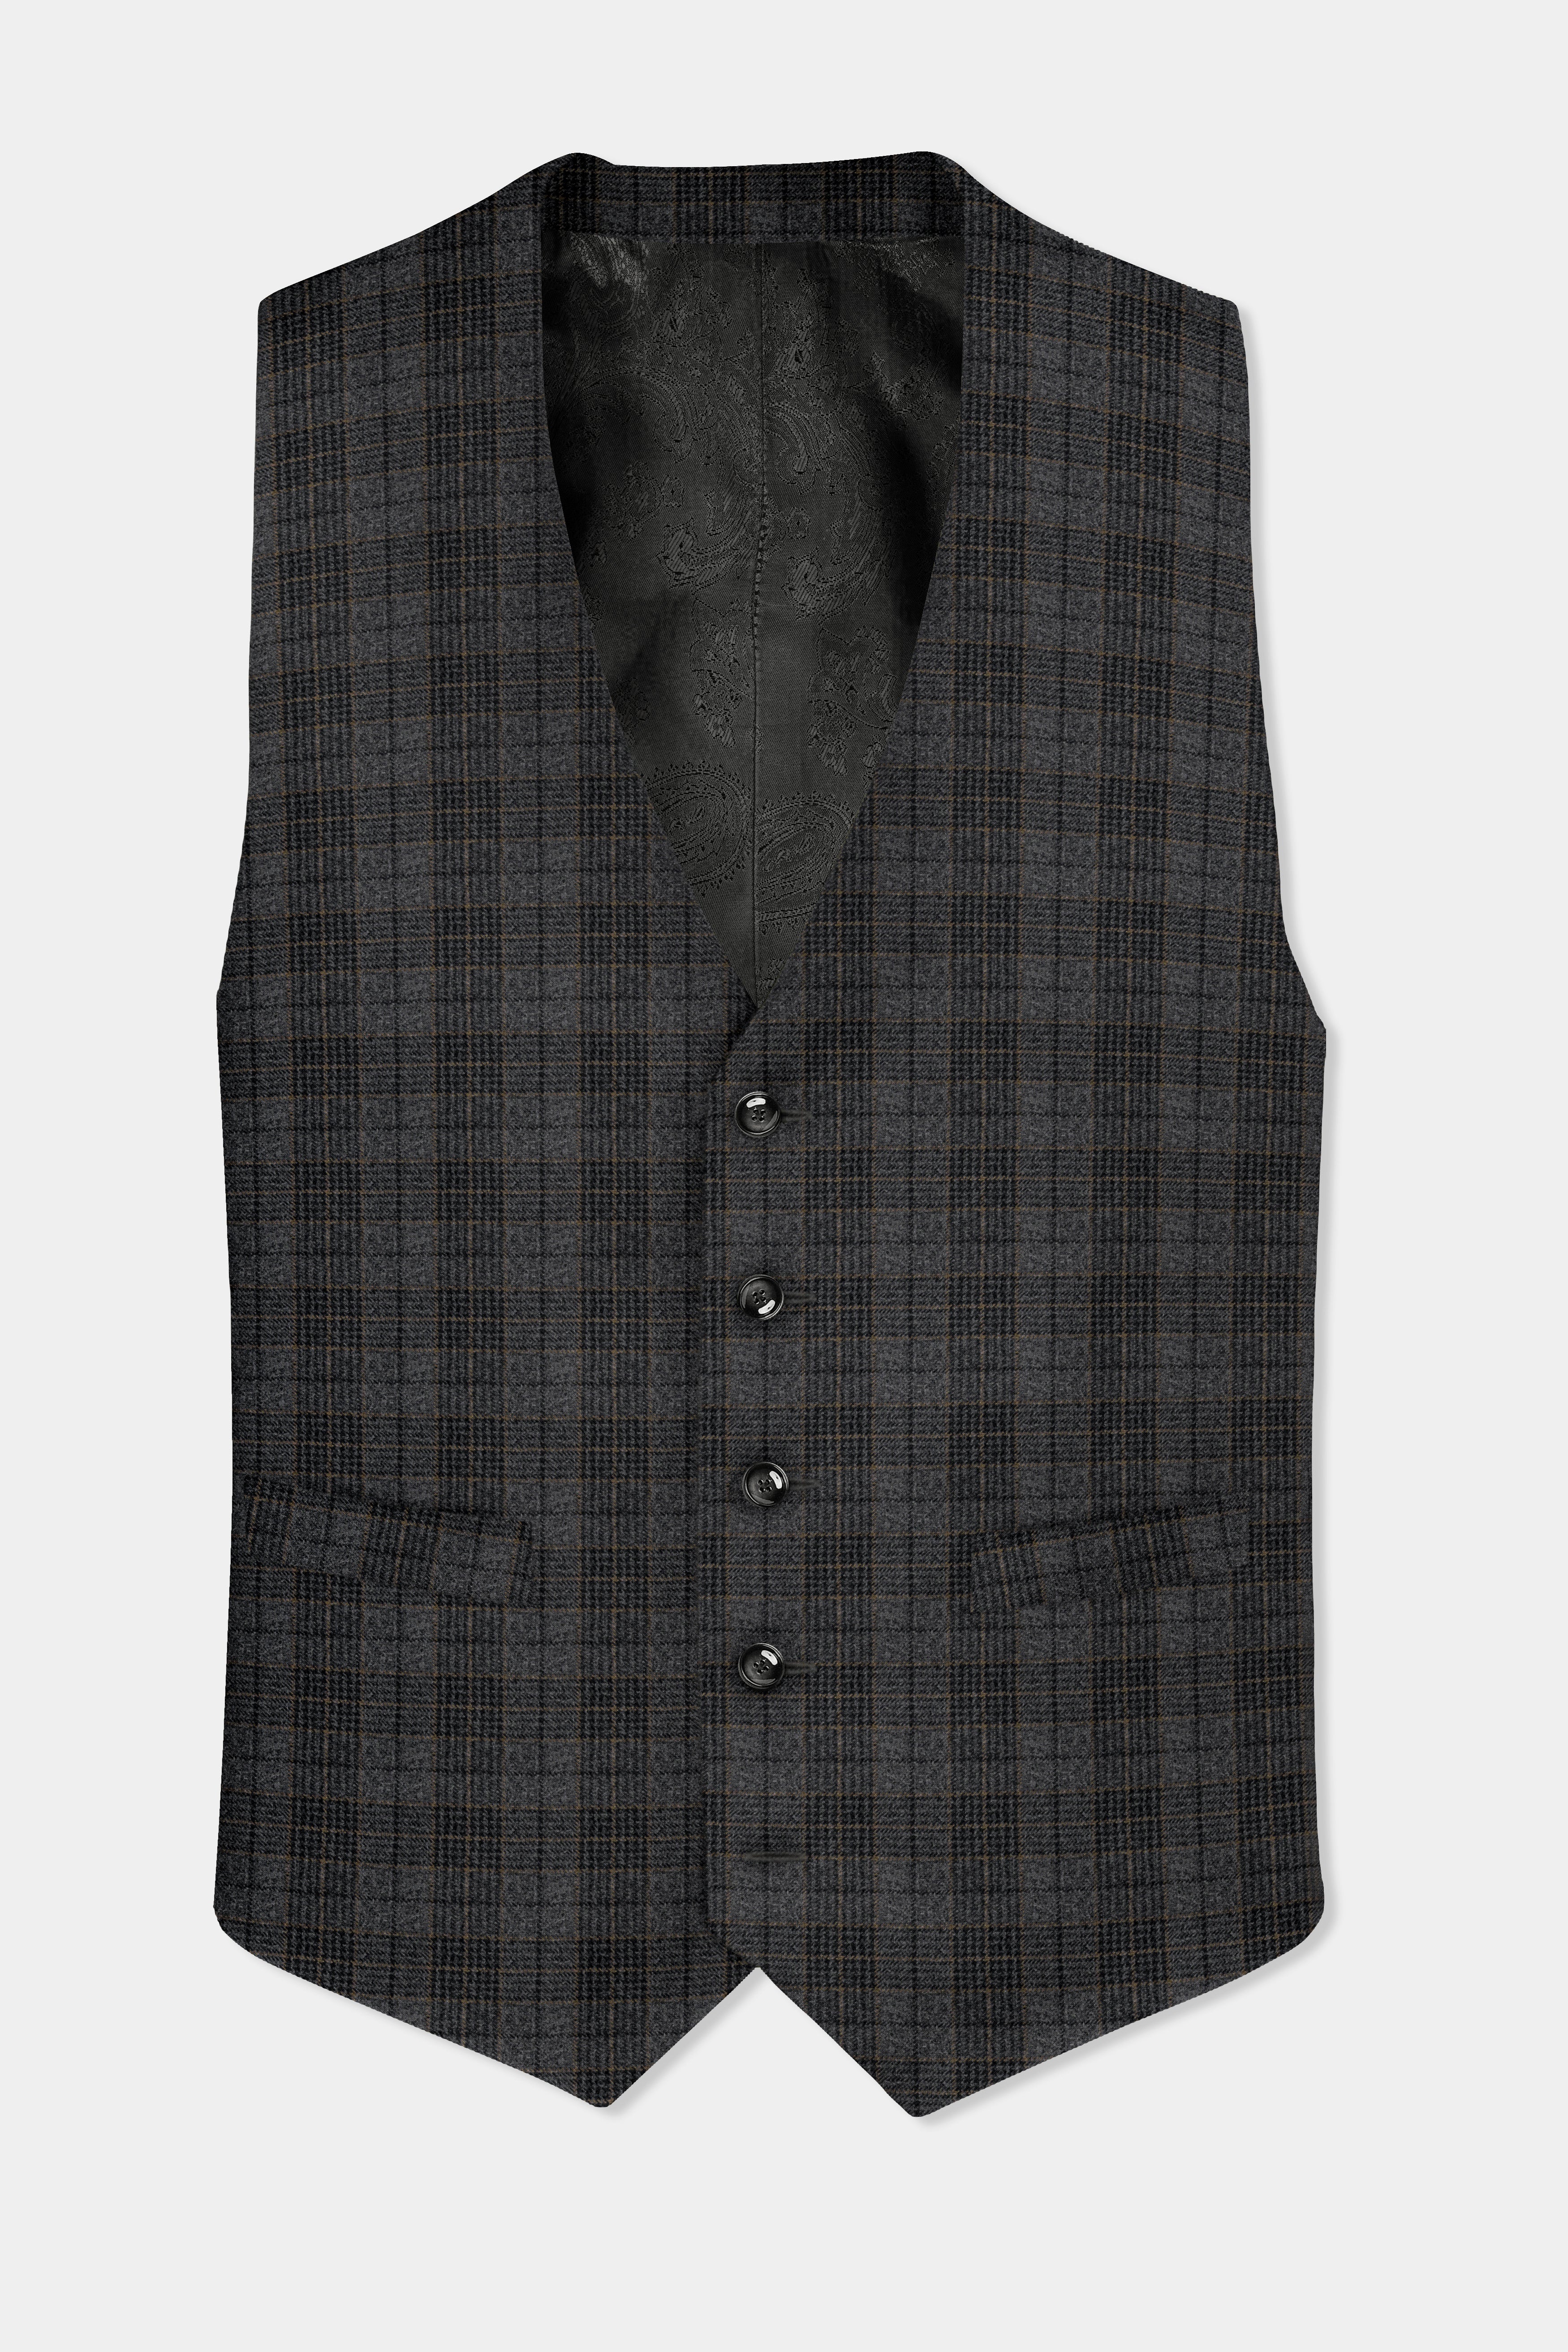 Charcoal Gray Plaid Tweed waistcoat